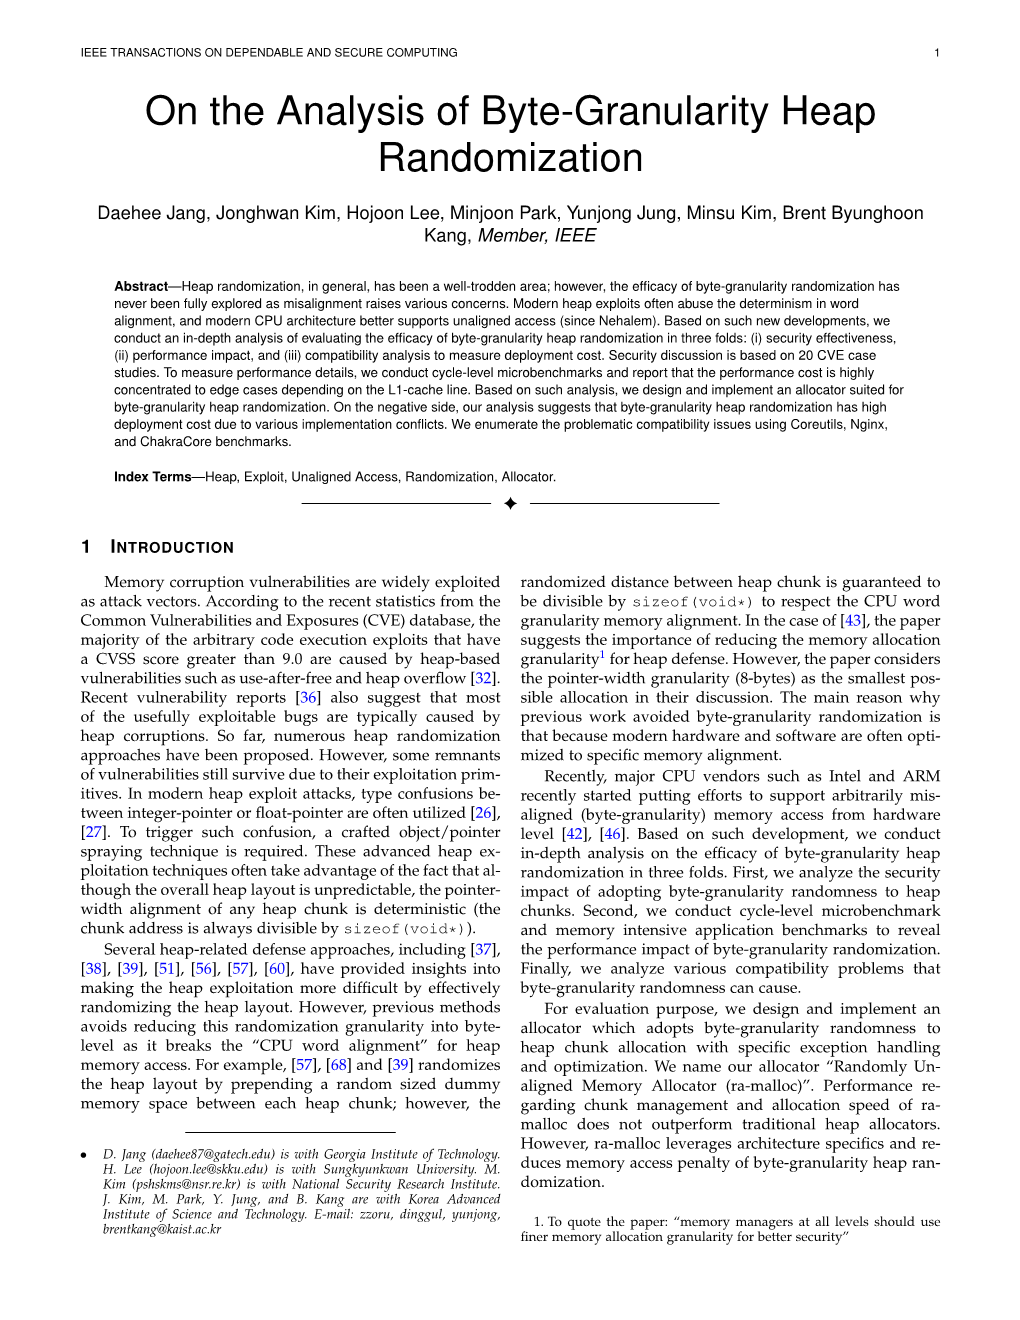 On the Analysis of Byte-Granularity Heap Randomization